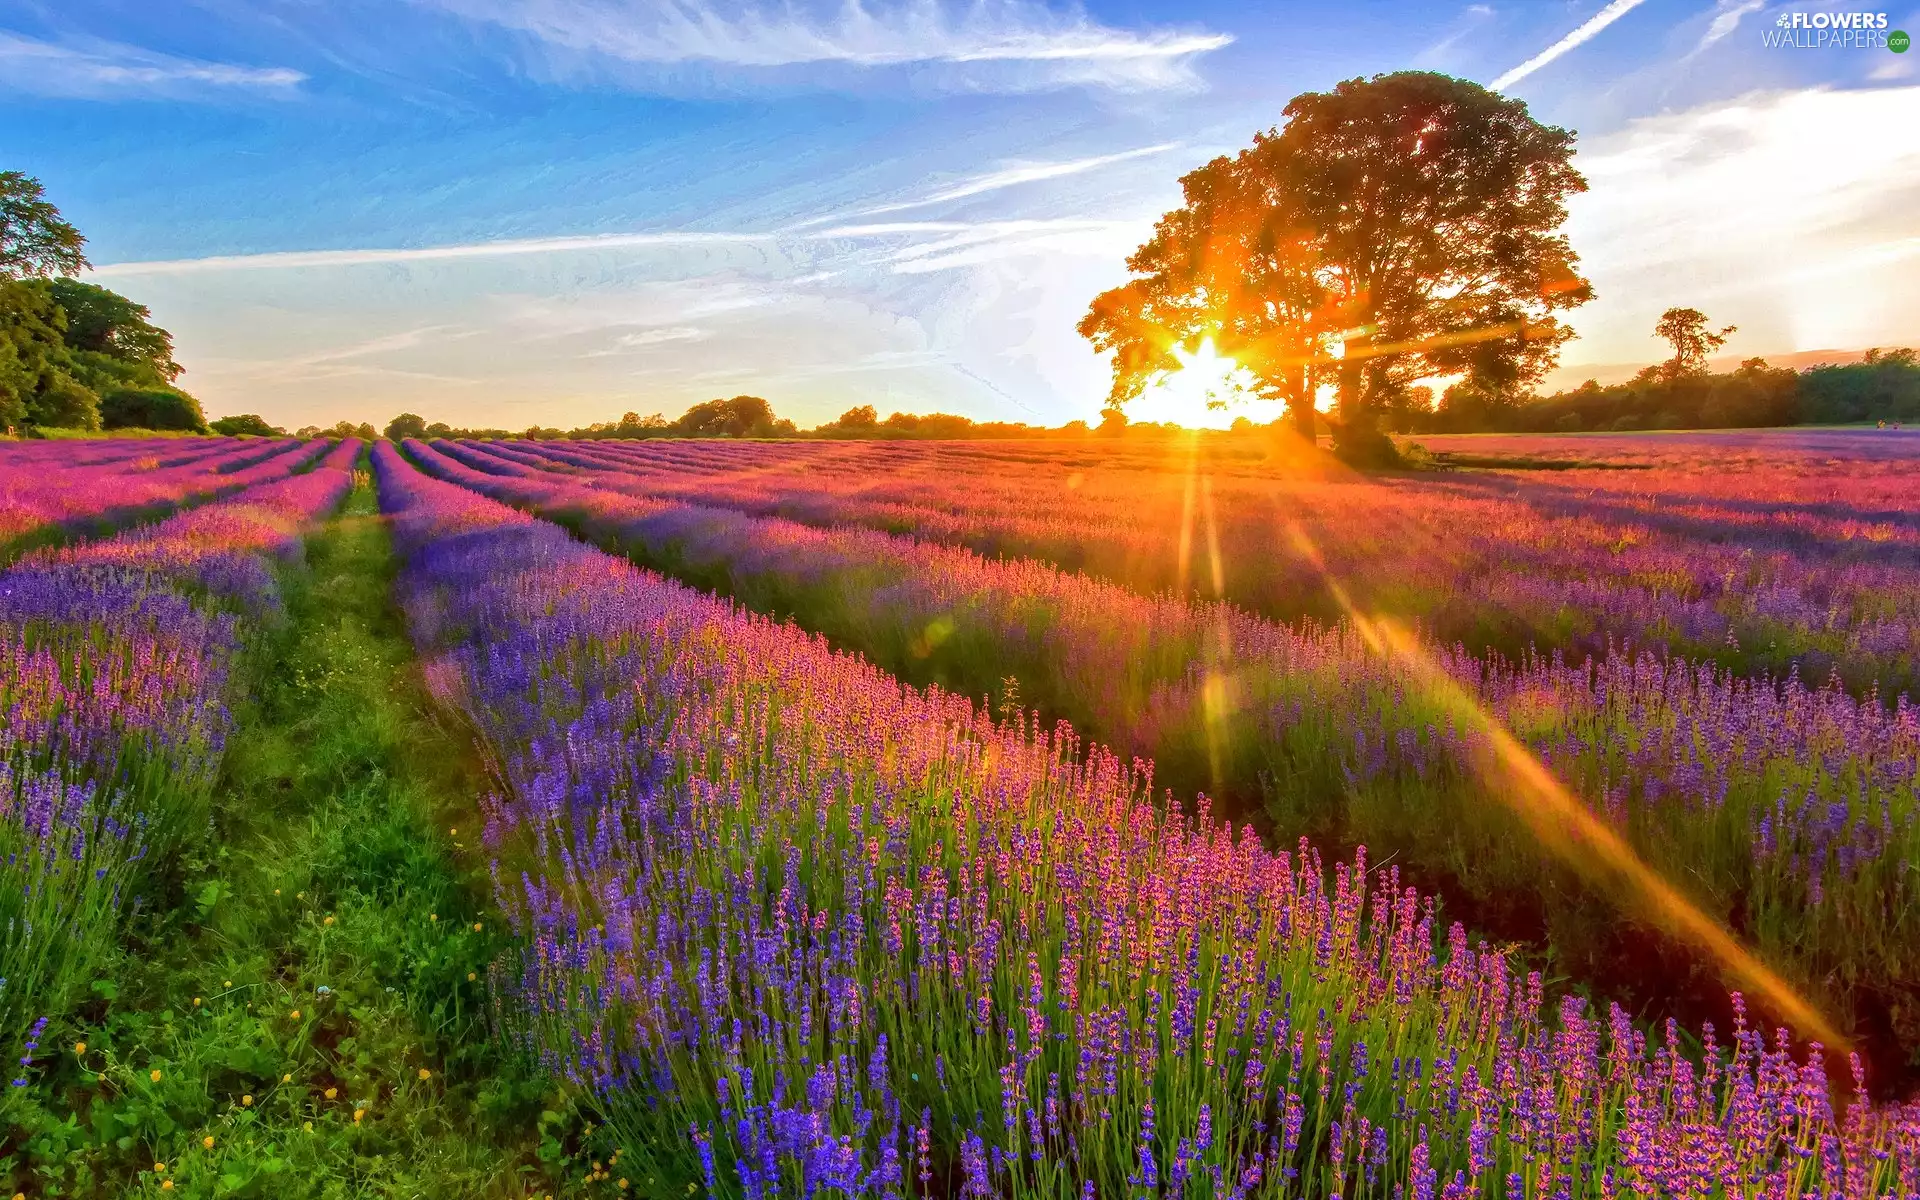 Field, west, sun, lavender